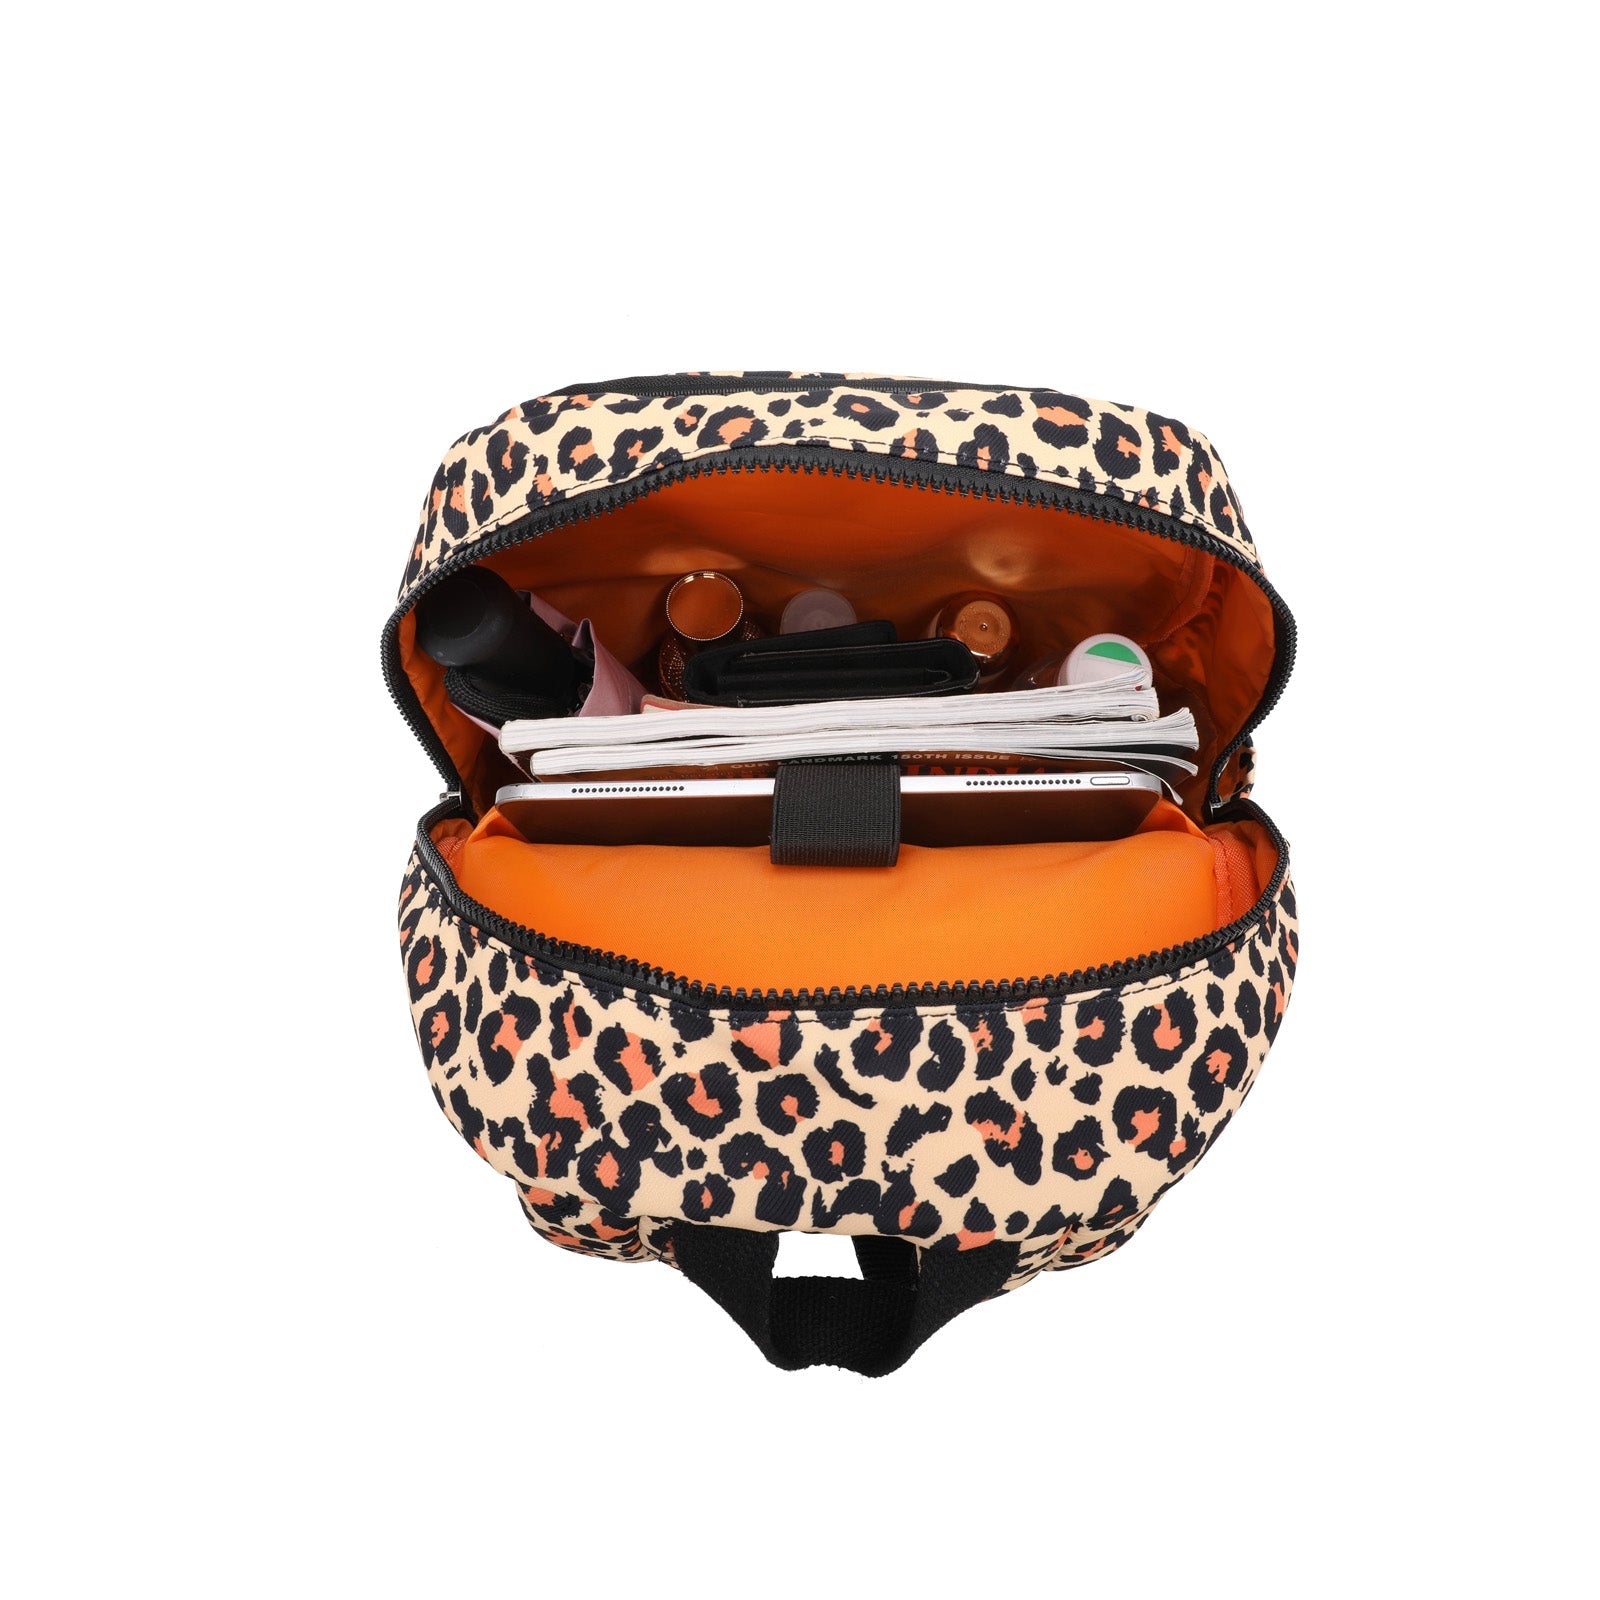 Montana West Leopard Print Backpack - Cowgirl Wear